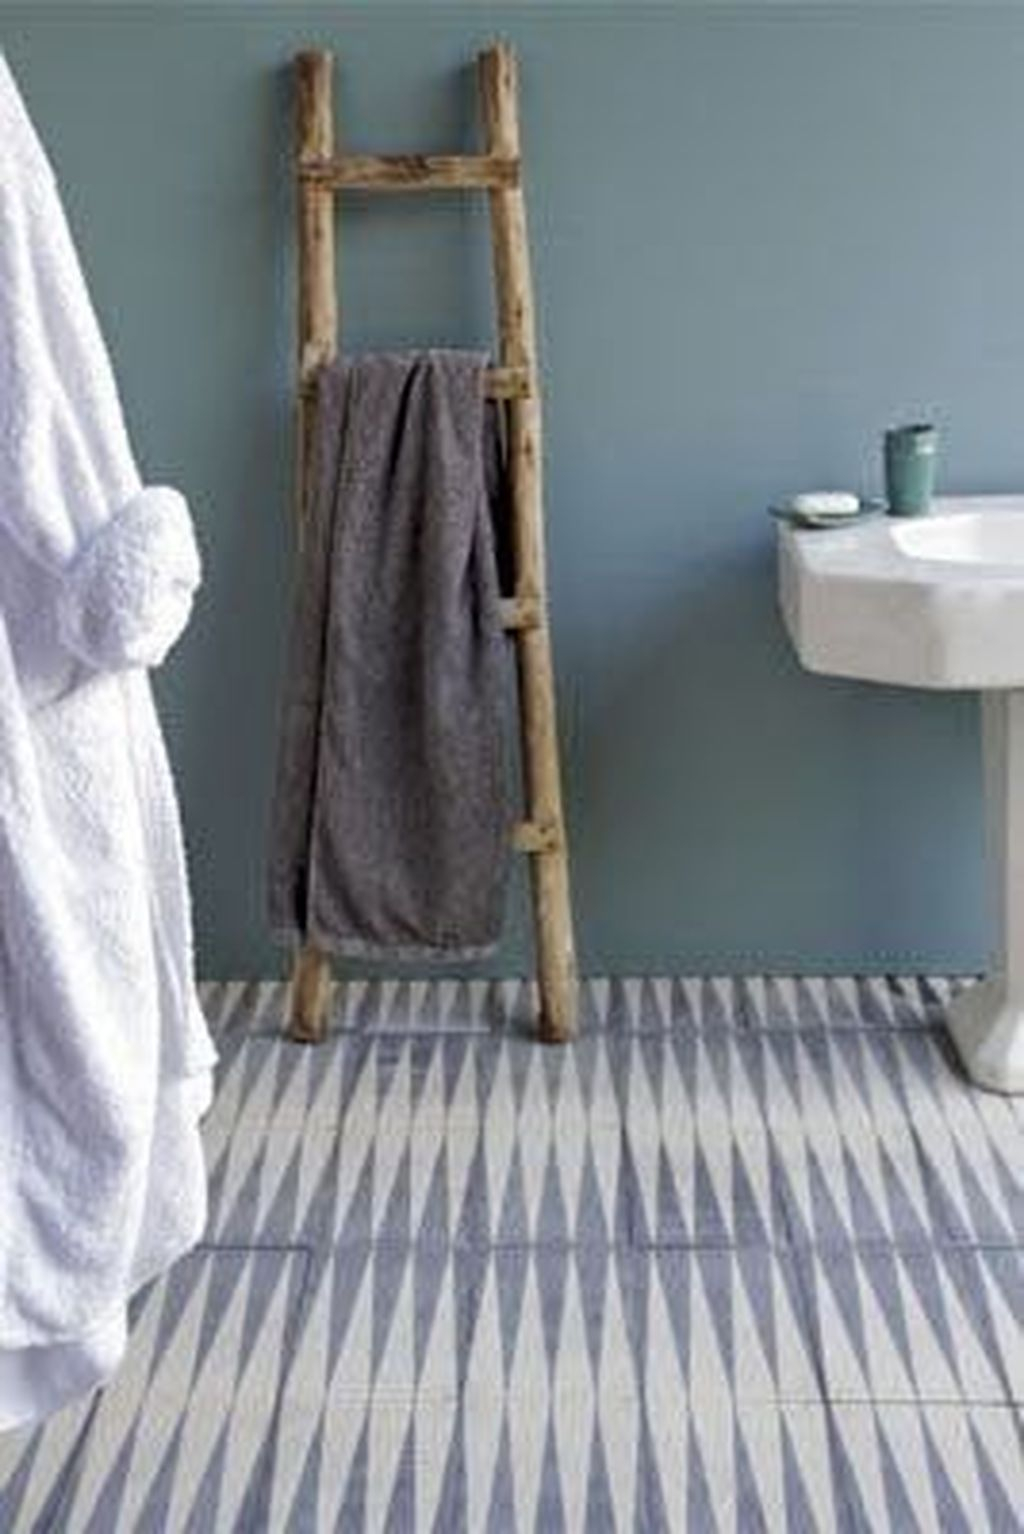 The Best Bathroom Floor Motif Ideas Ready To Amaze You38